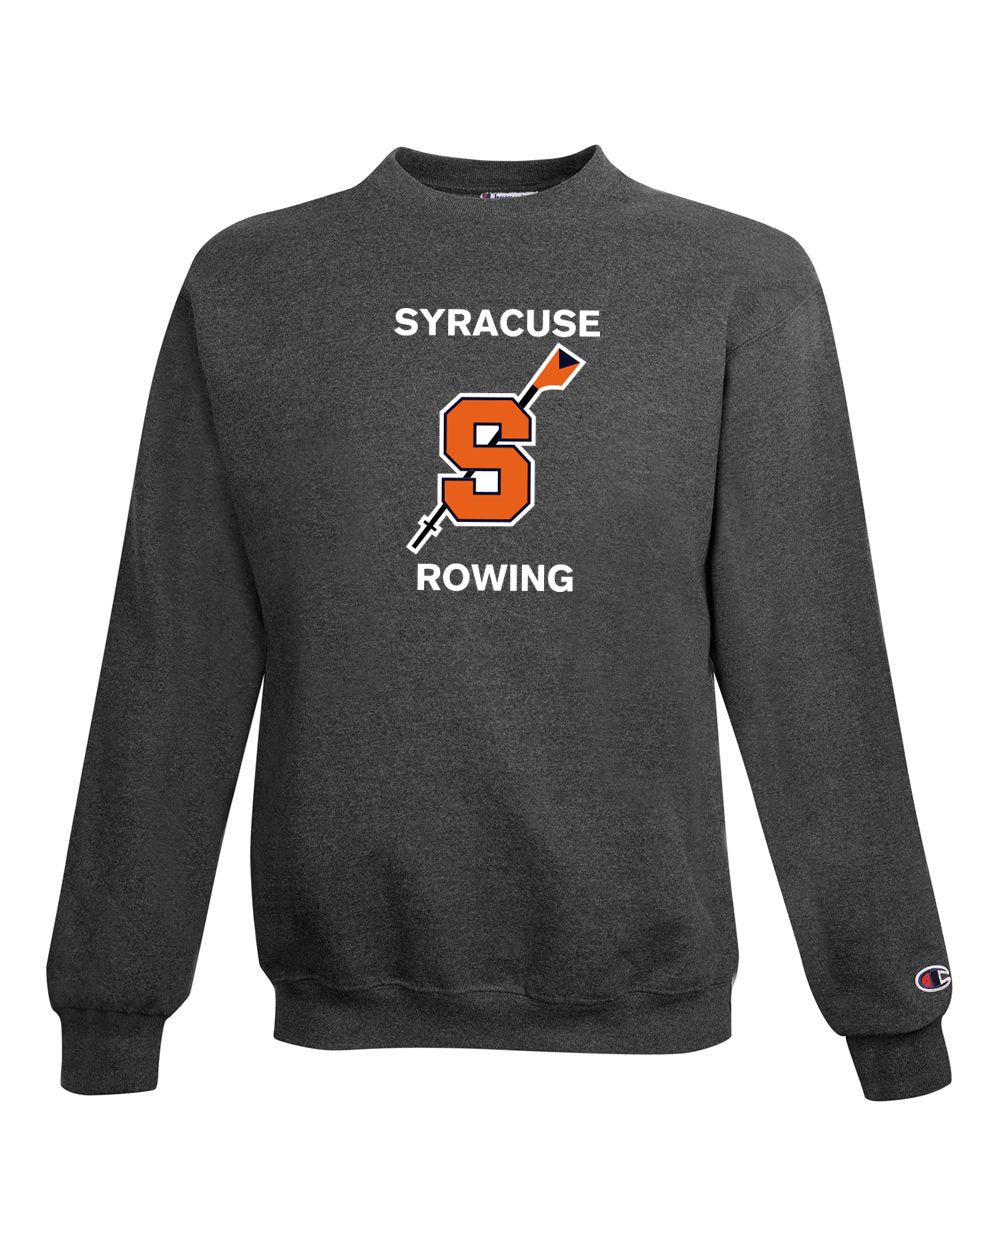 Syracuse Alumni Crewneck Sweatshirt